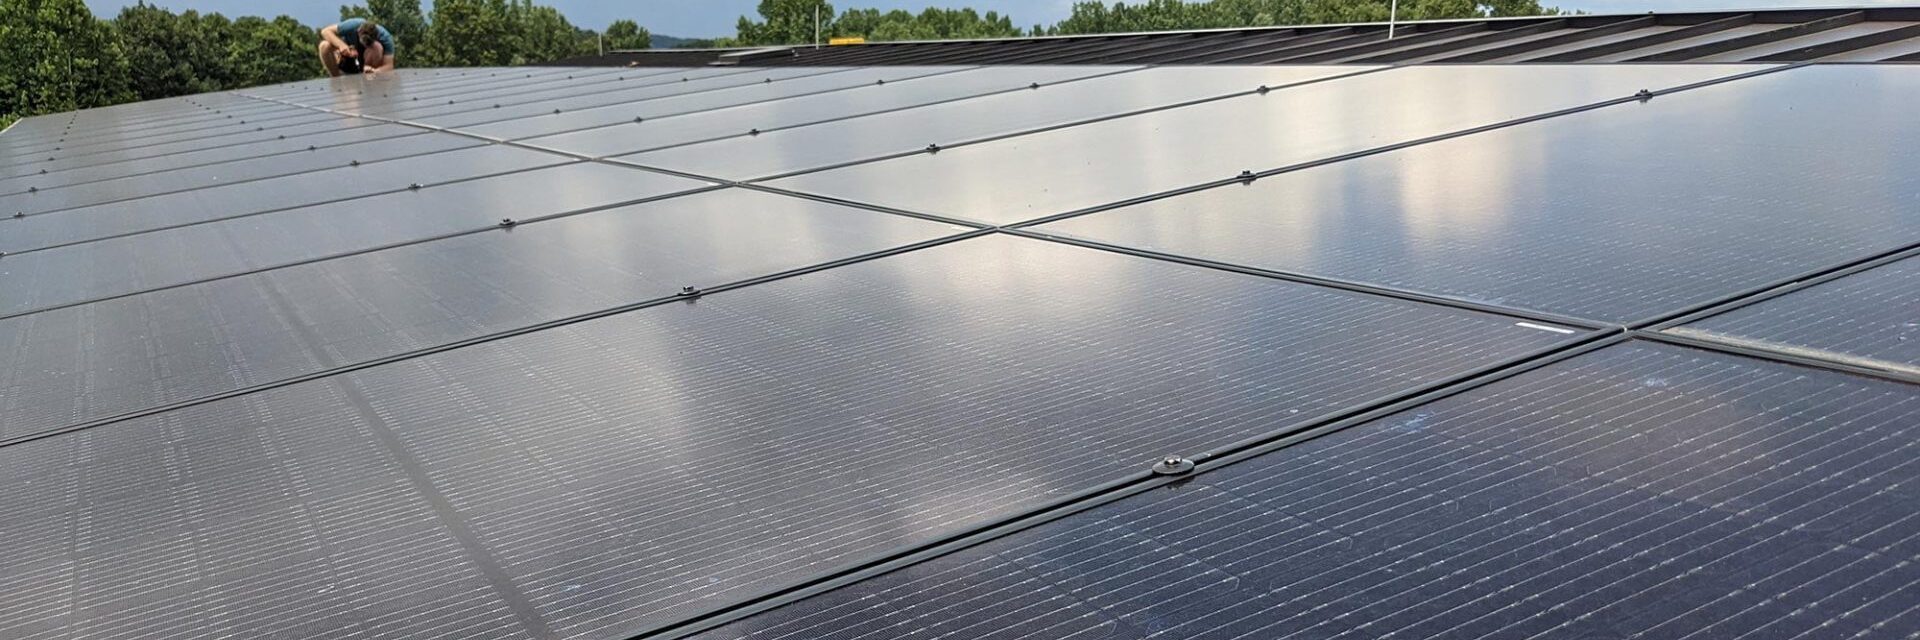 Solar panels on metal roof in Virginia